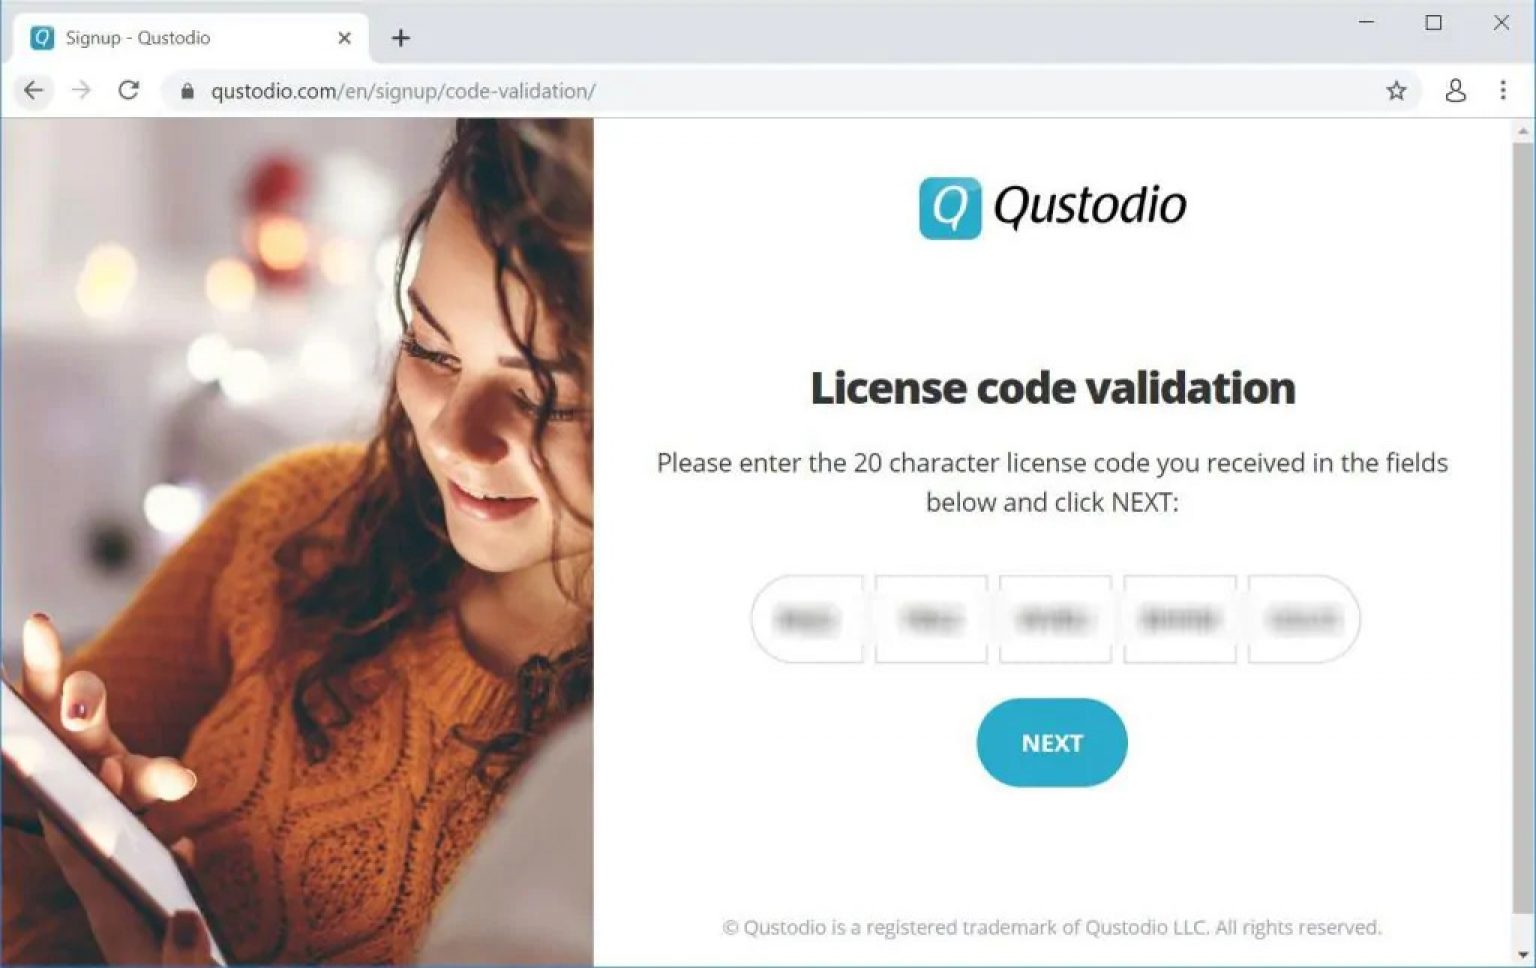 qustodio promotion code